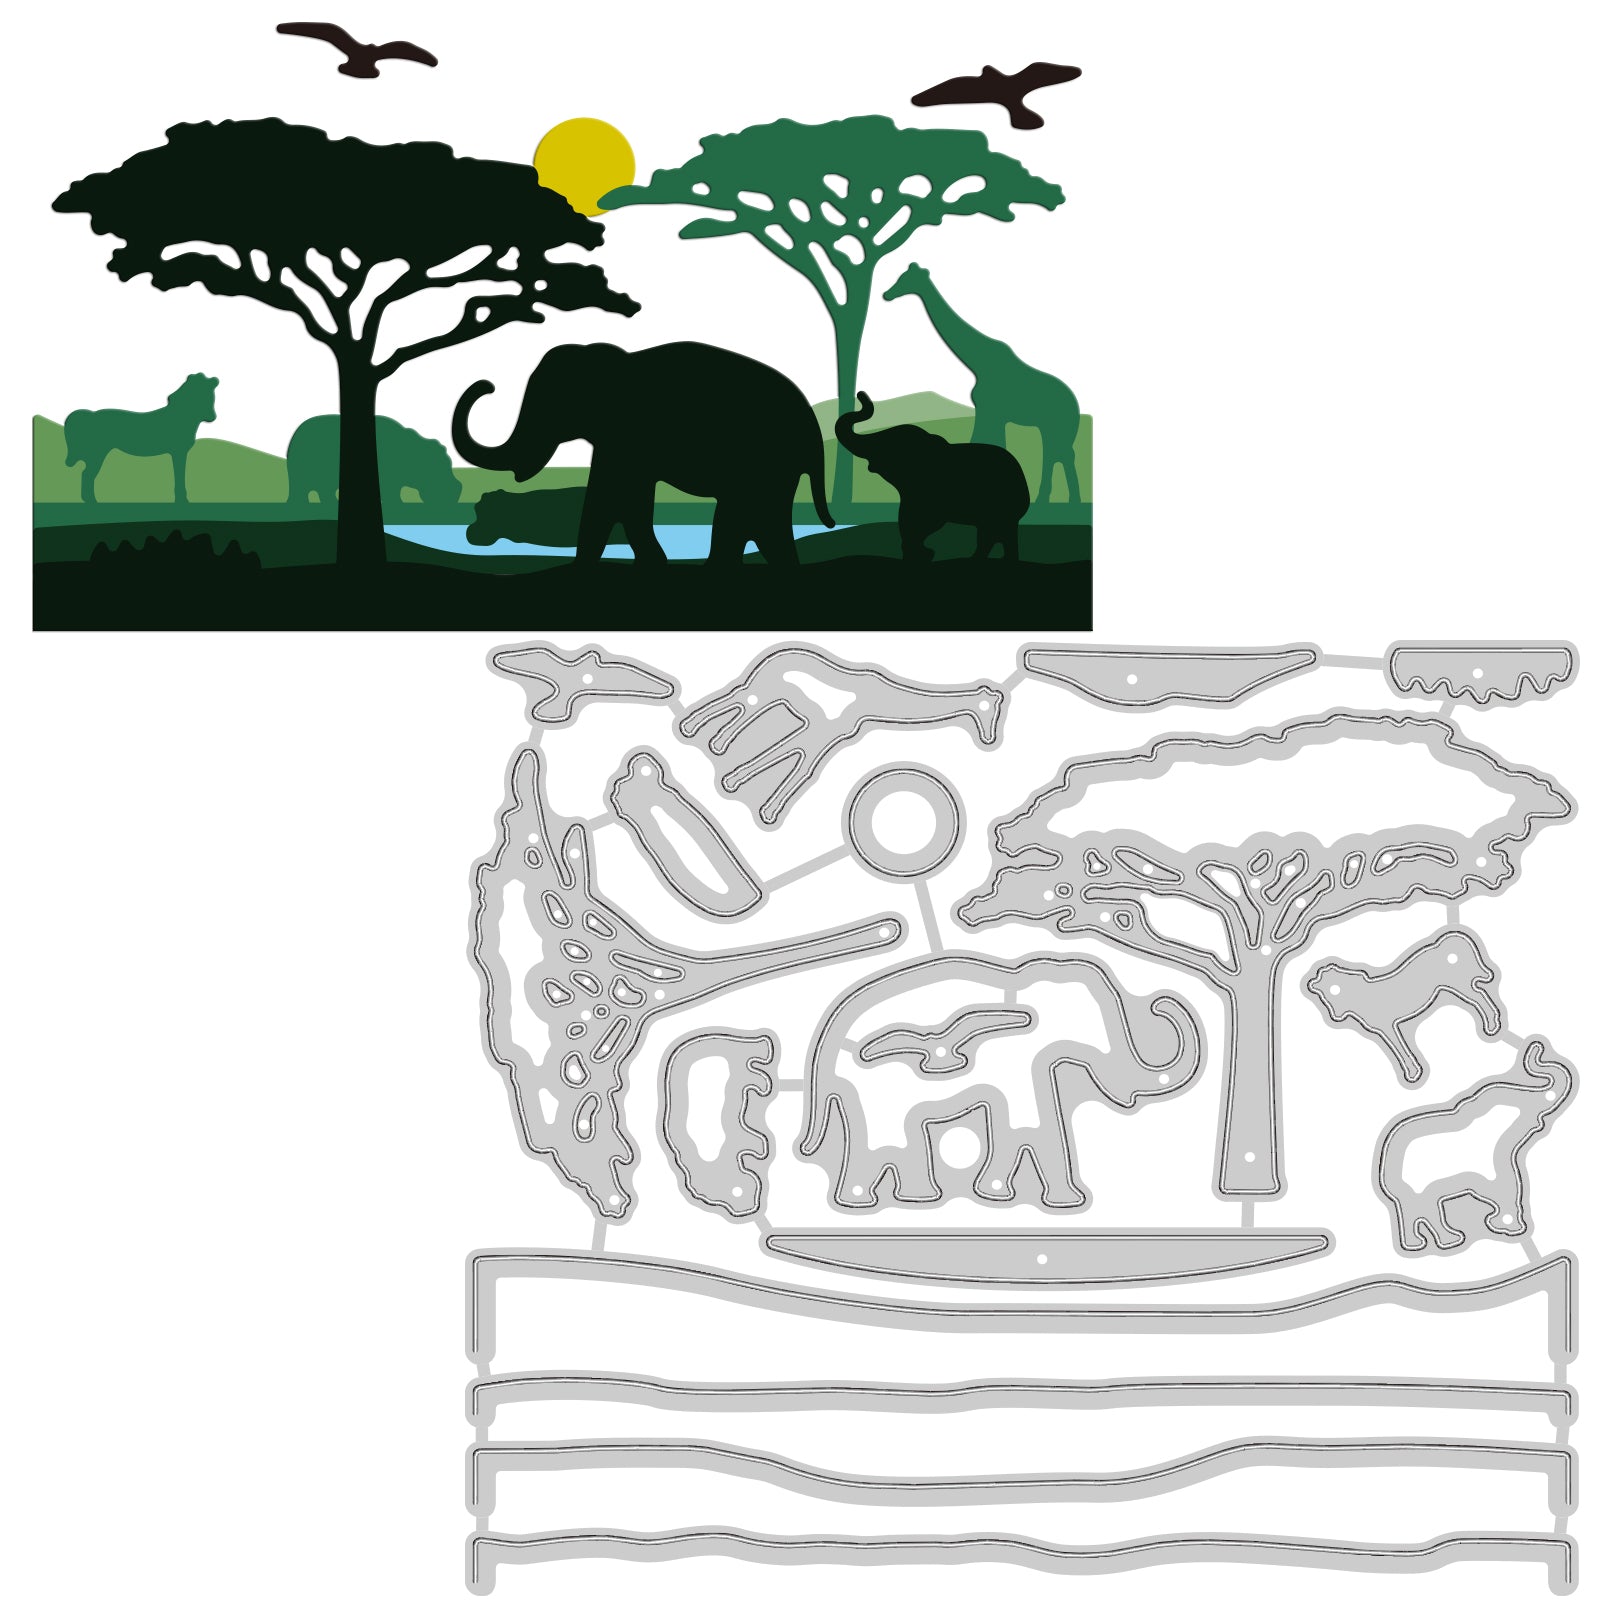 Globleland Africa, Scene, Elephants, Giraffes, Trees, Hippos, Zebras, Birds Carbon Steel Cutting Dies Stencils, for DIY Scrapbooking/Photo Album, Decorative Embossing DIY Paper Card